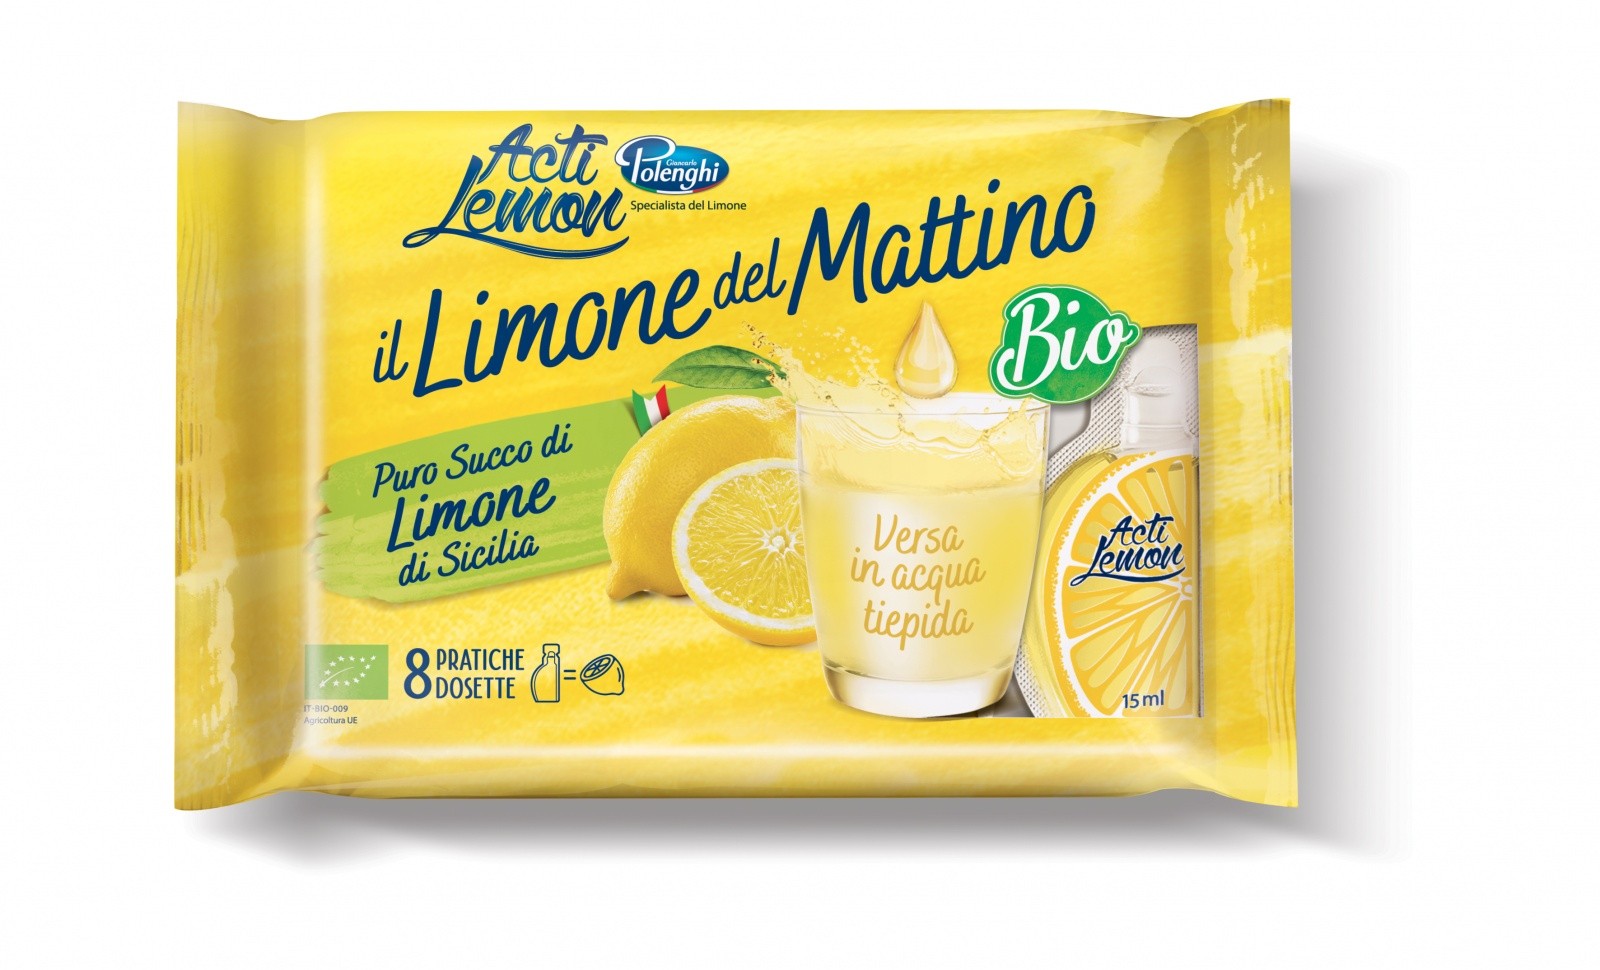 ACTI LEMON "Organic Lemon Juice" | The Morning Lemon